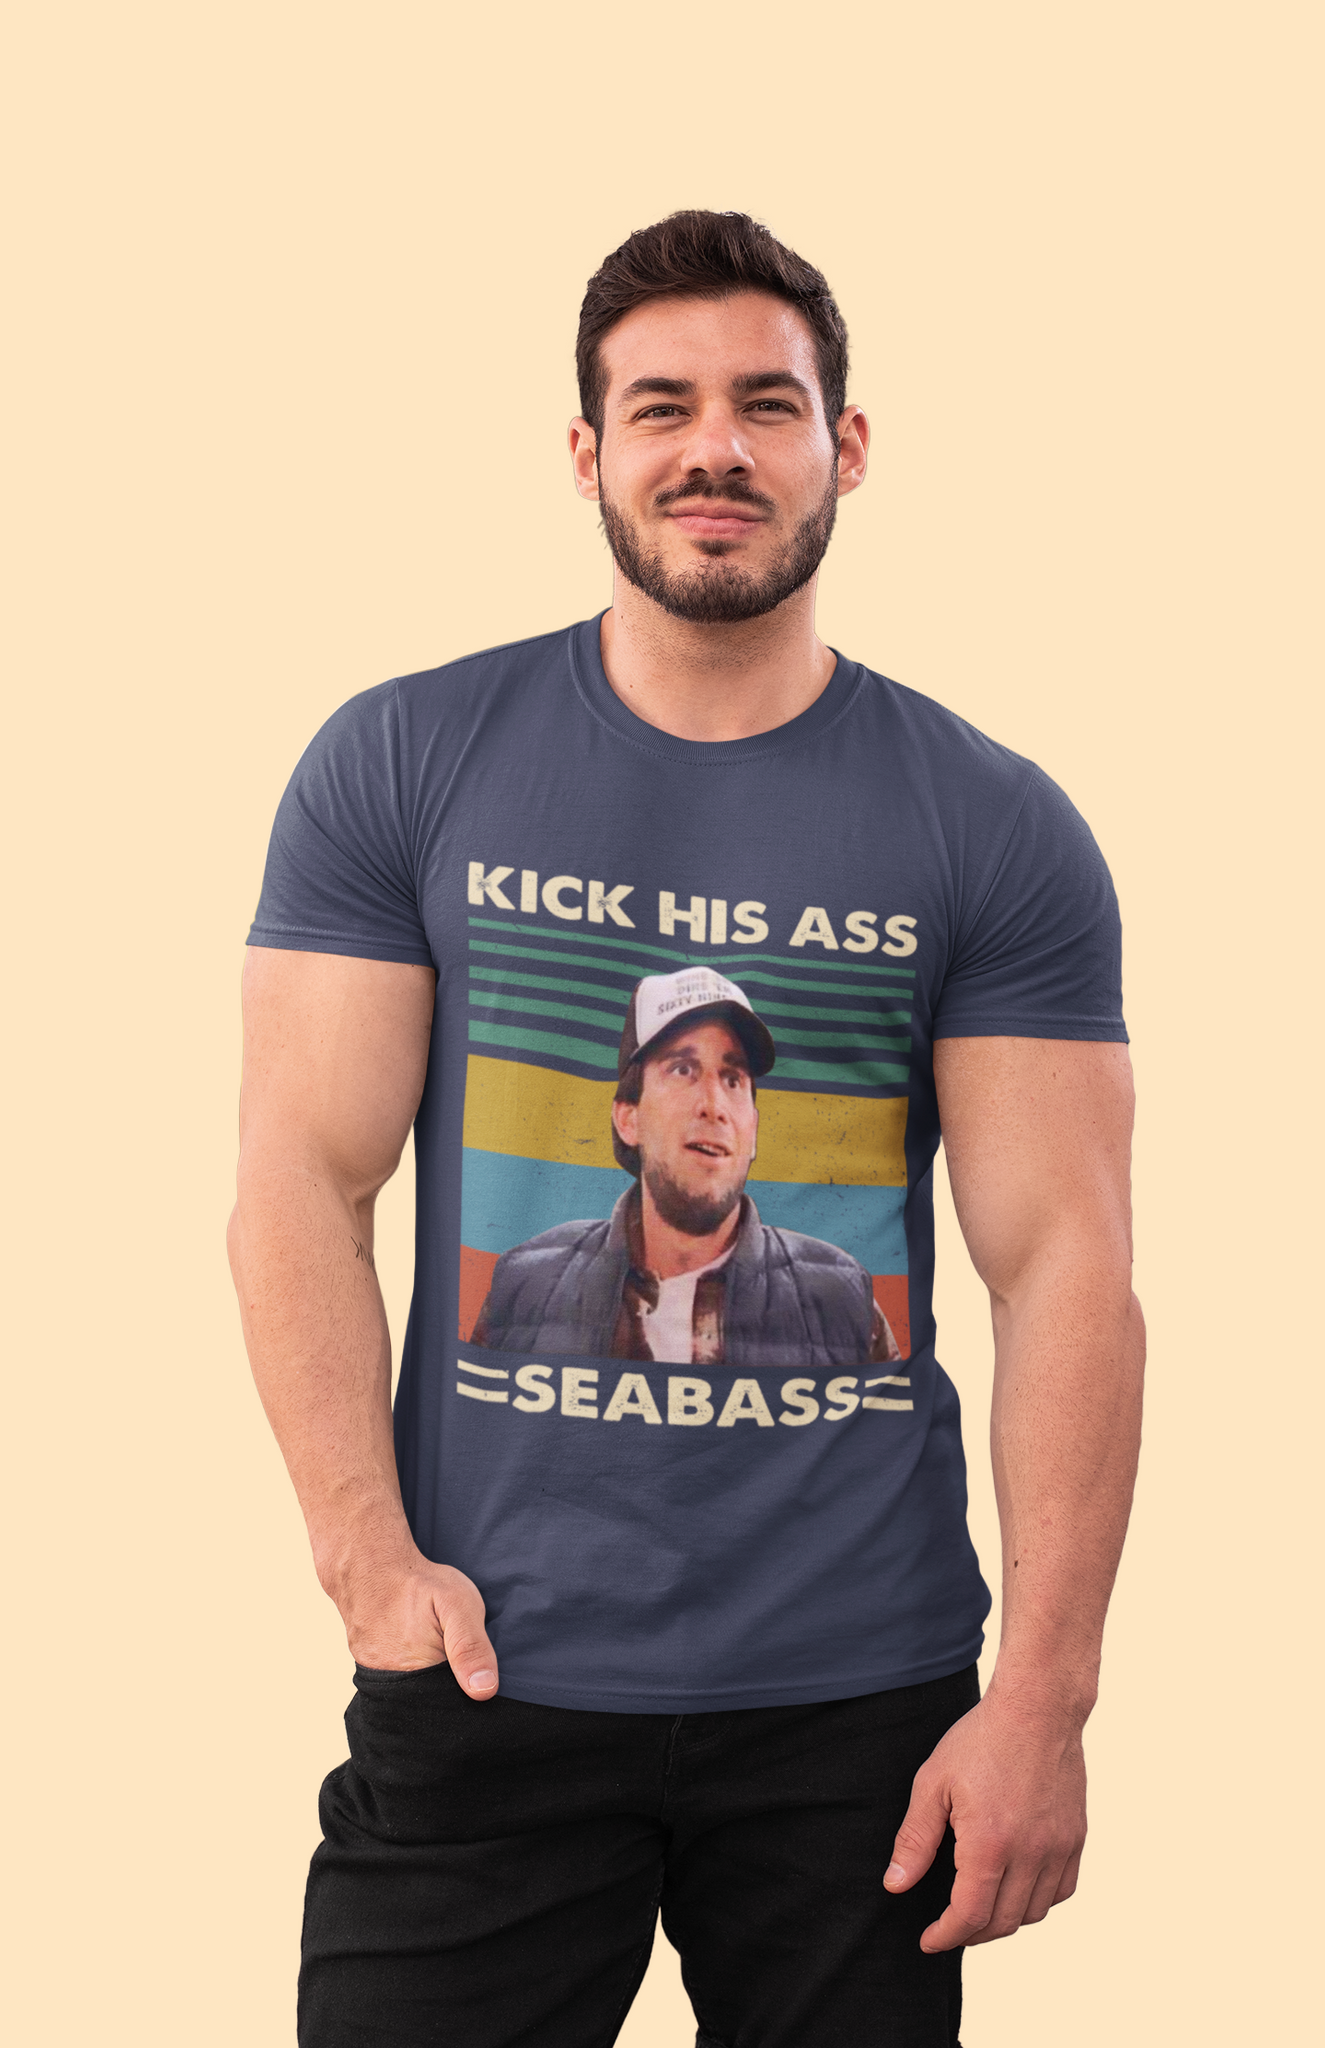 Dumb And Dumber Vintage T Shirt, Sea Bass T Shirt, Kick His Ass Seabass Tshirt